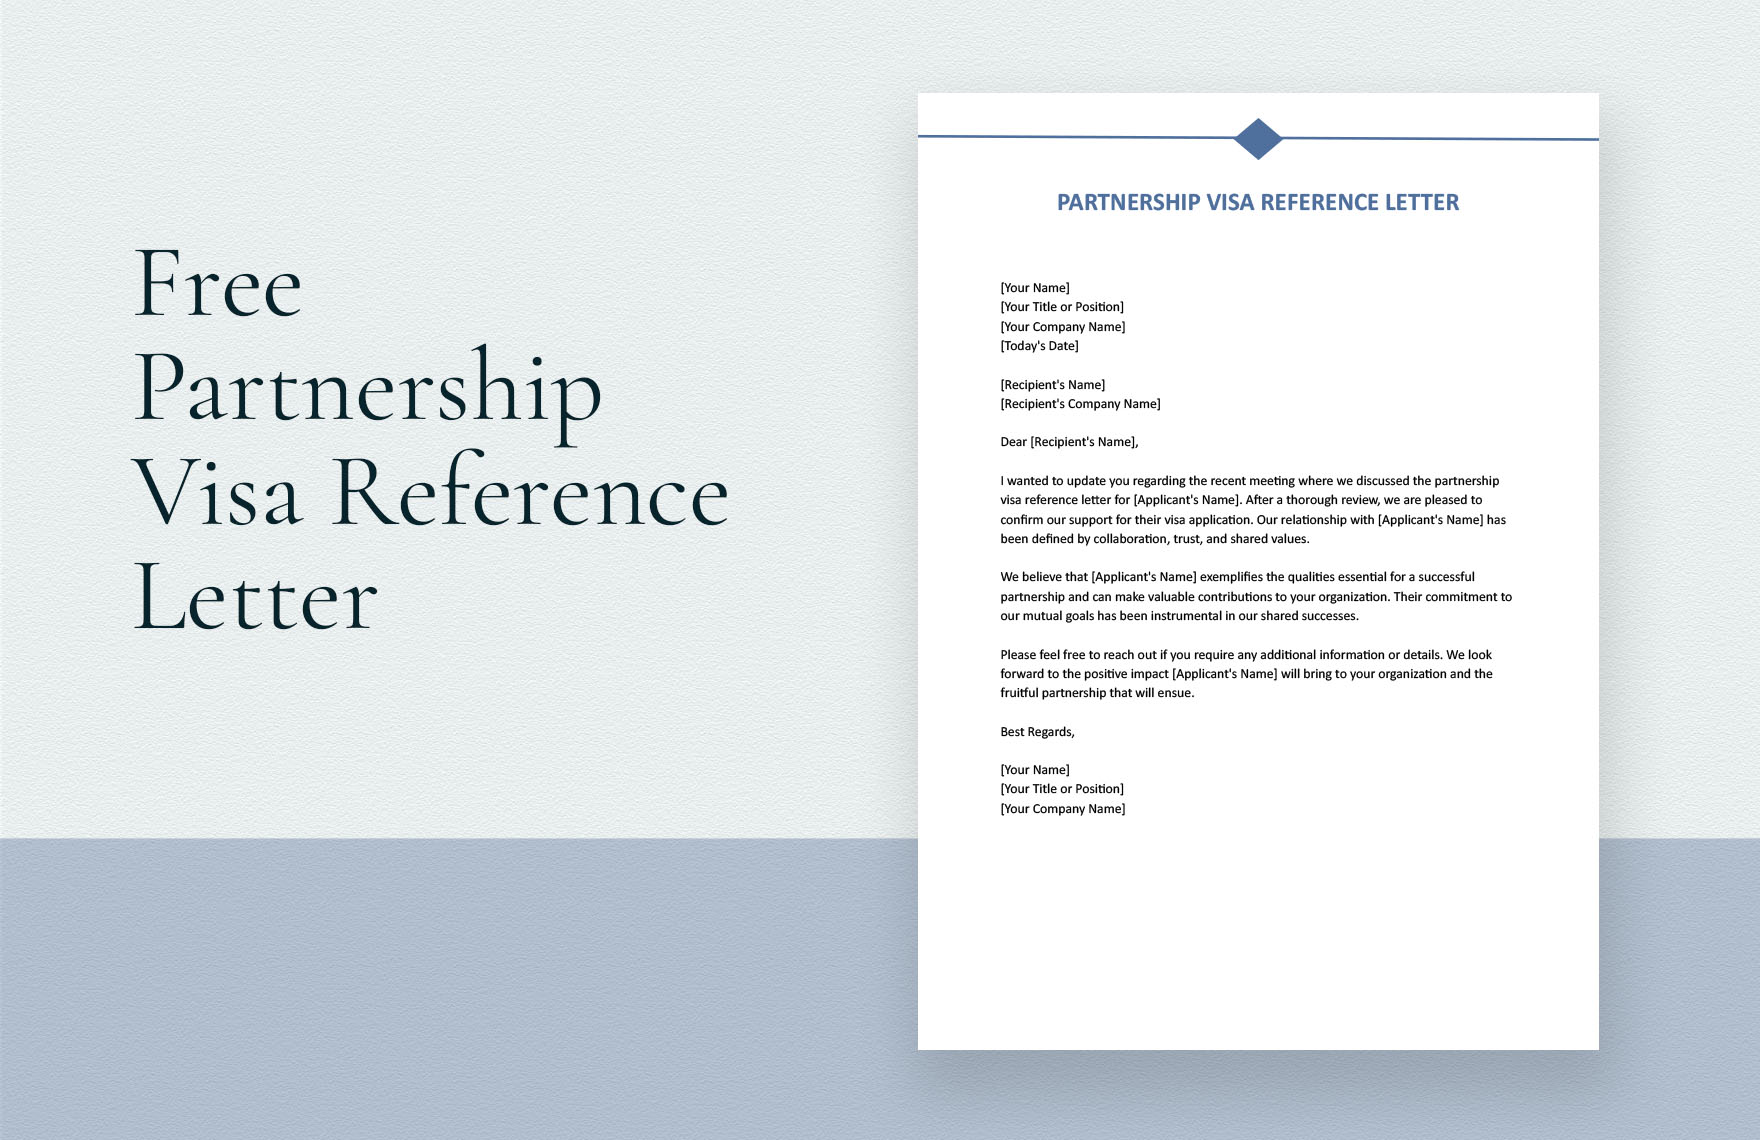 Partnership Visa Reference Letter